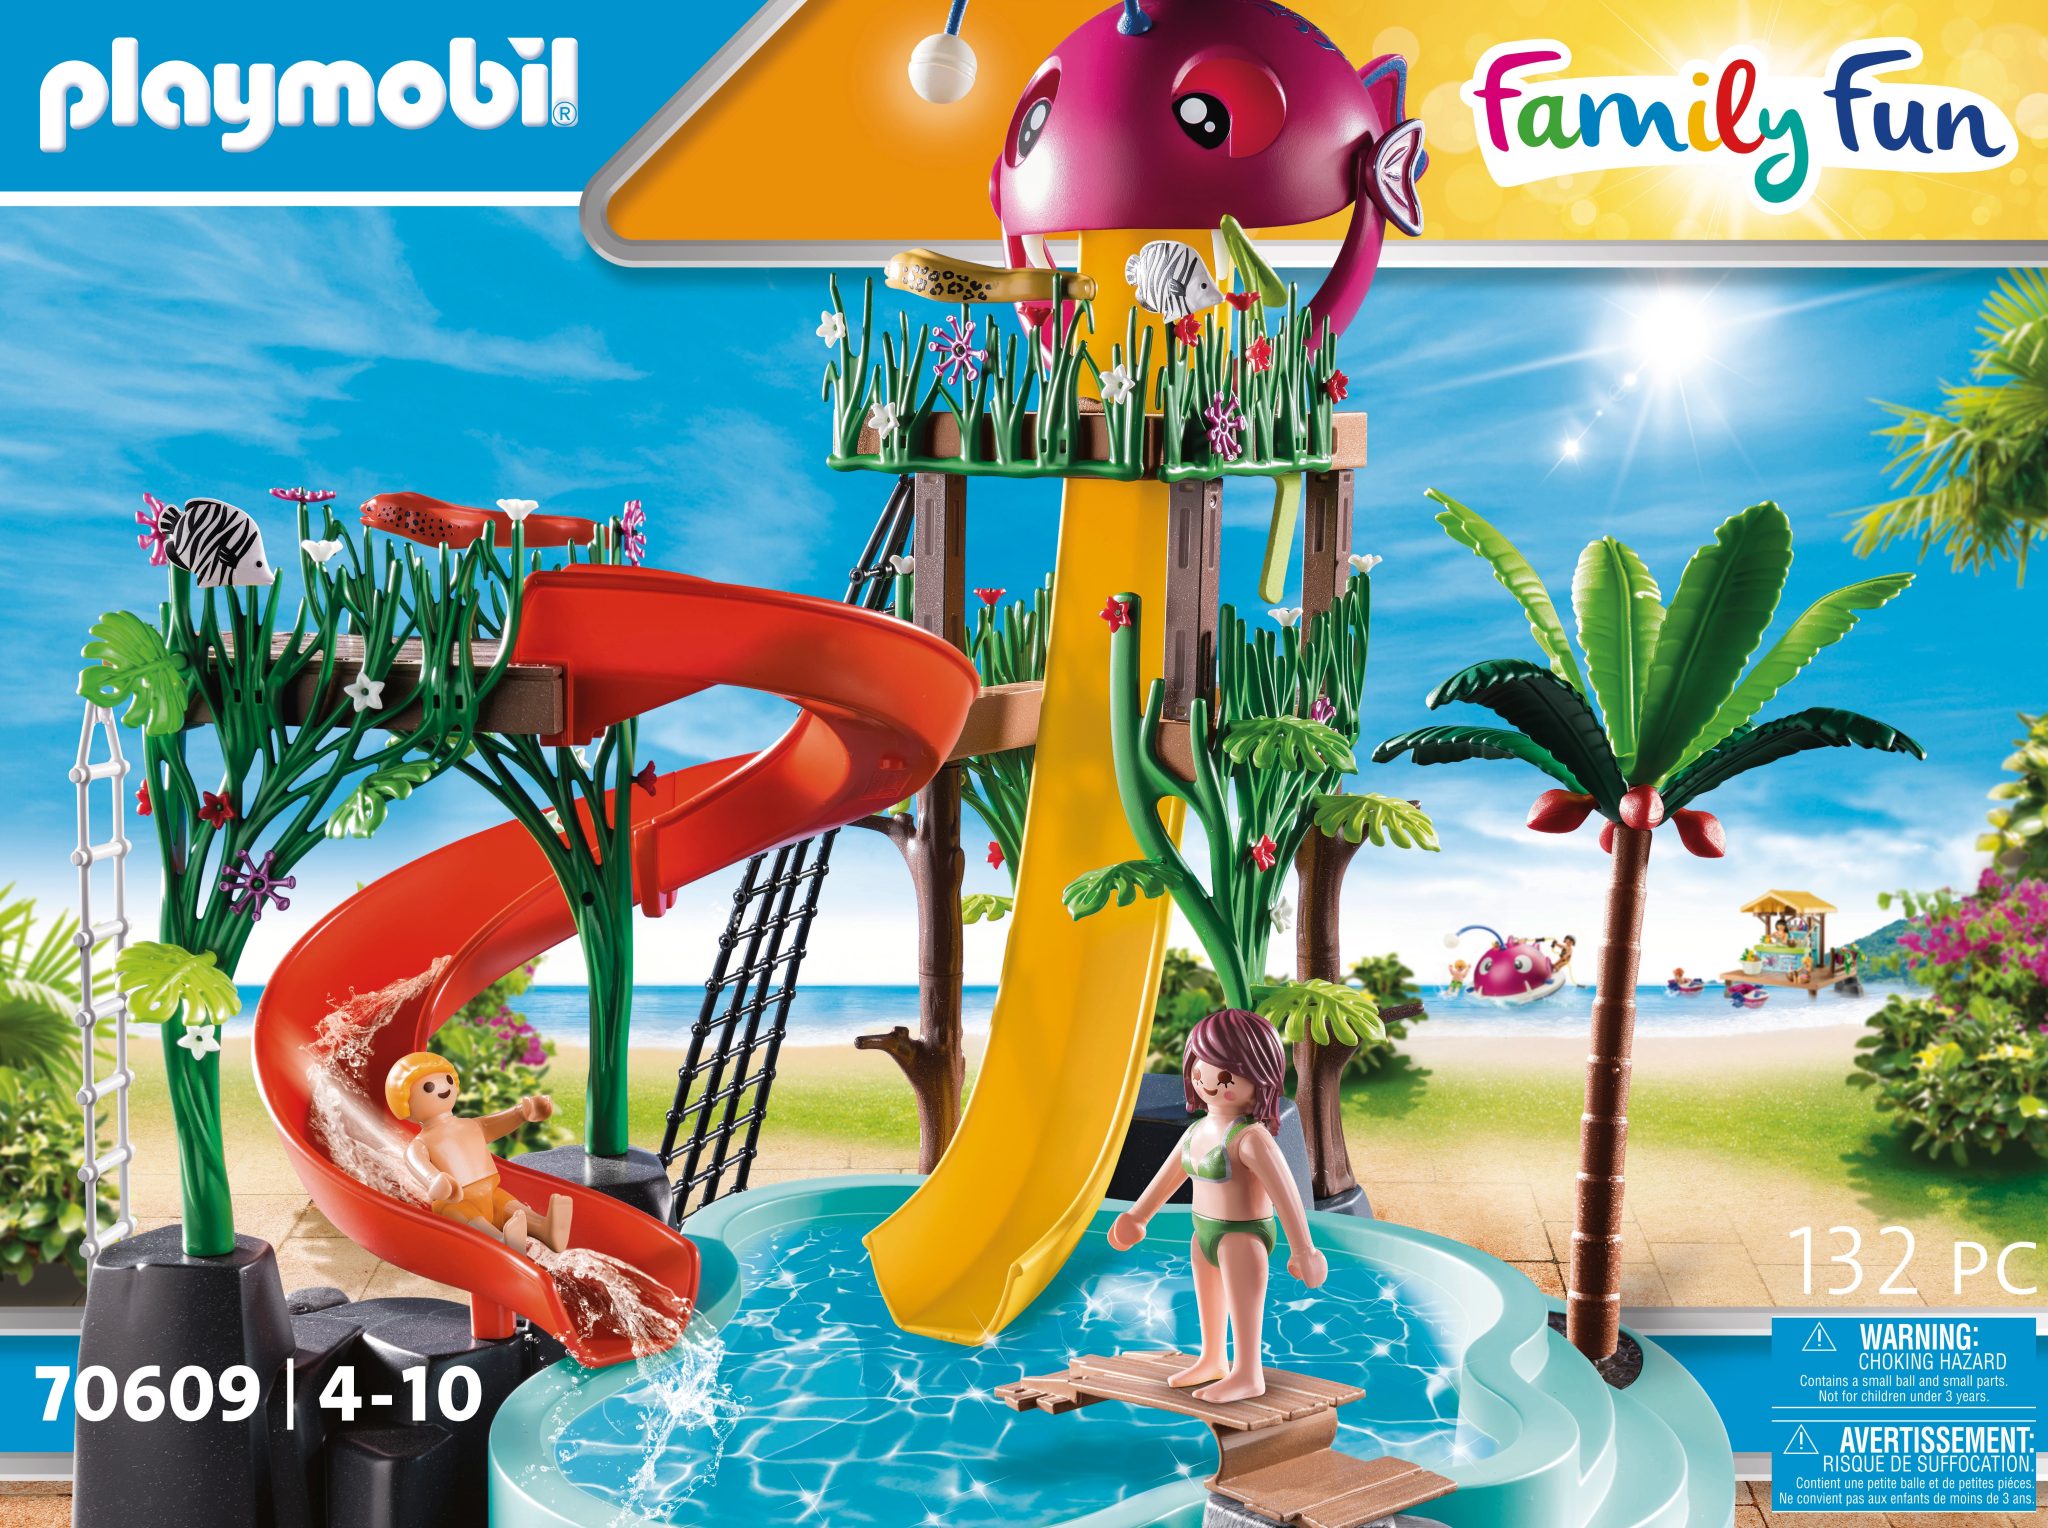 Playmobil - Family Fun - Piscine avec jet d'eau - 70609